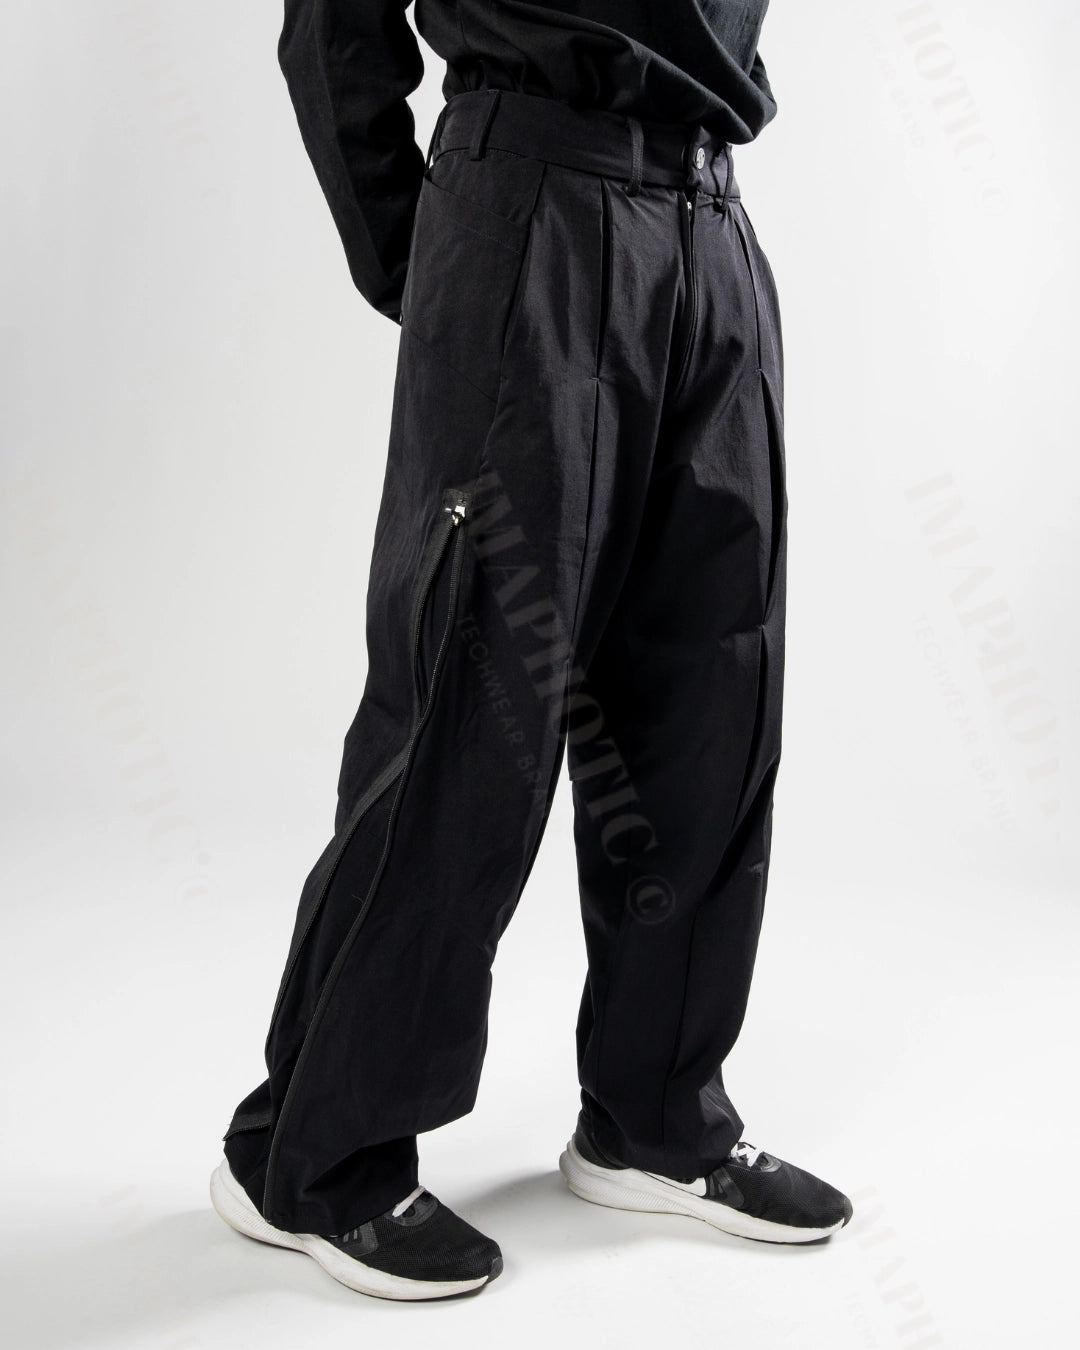 AUTIWITUA Men's Tactical Pants Water Resistant Flex India | Ubuy